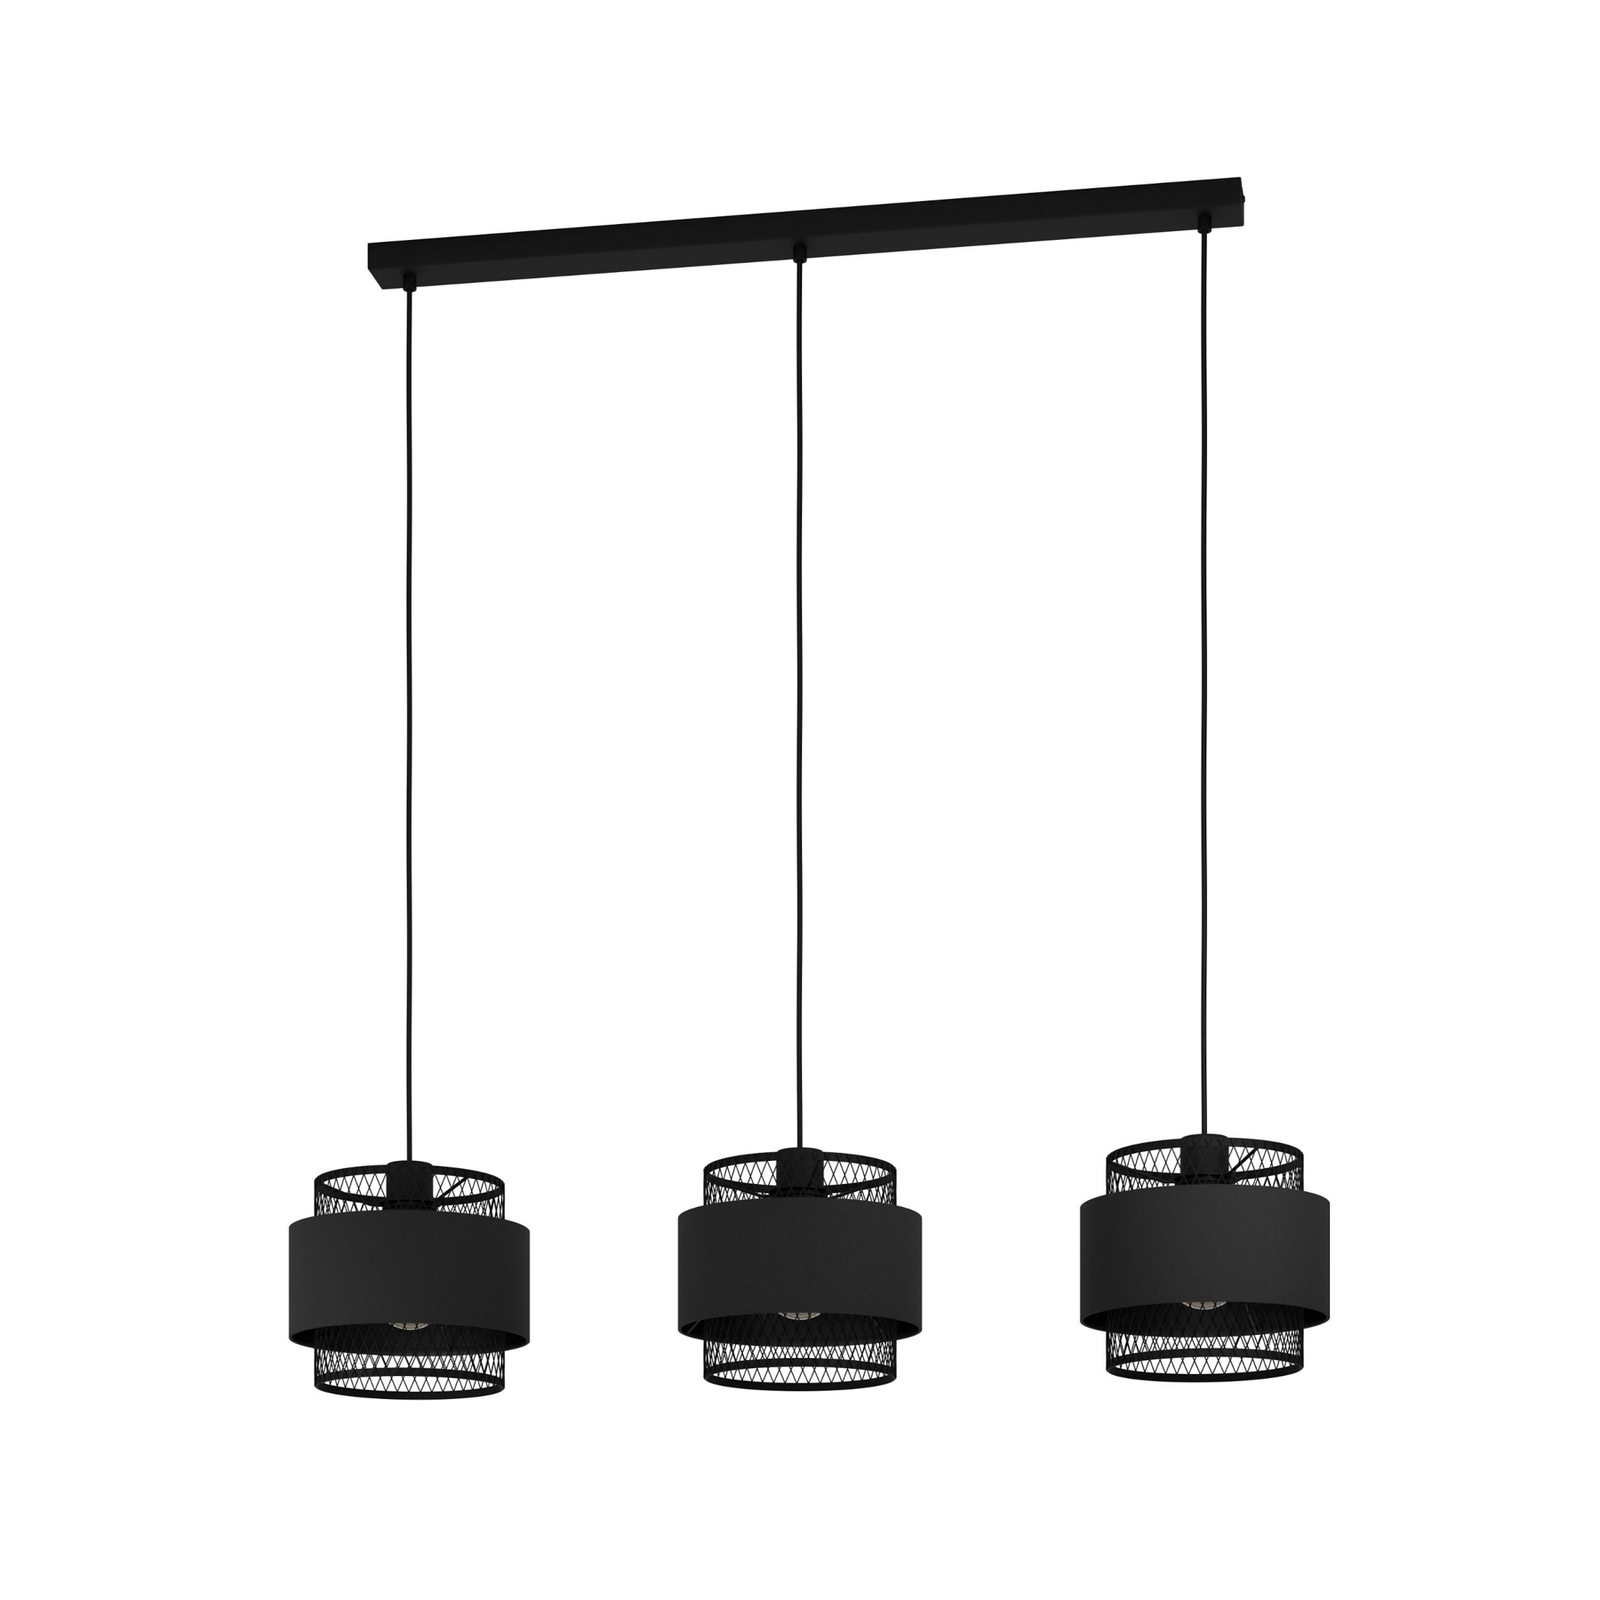 Bazely hanglamp, zwart, 3-lamps.